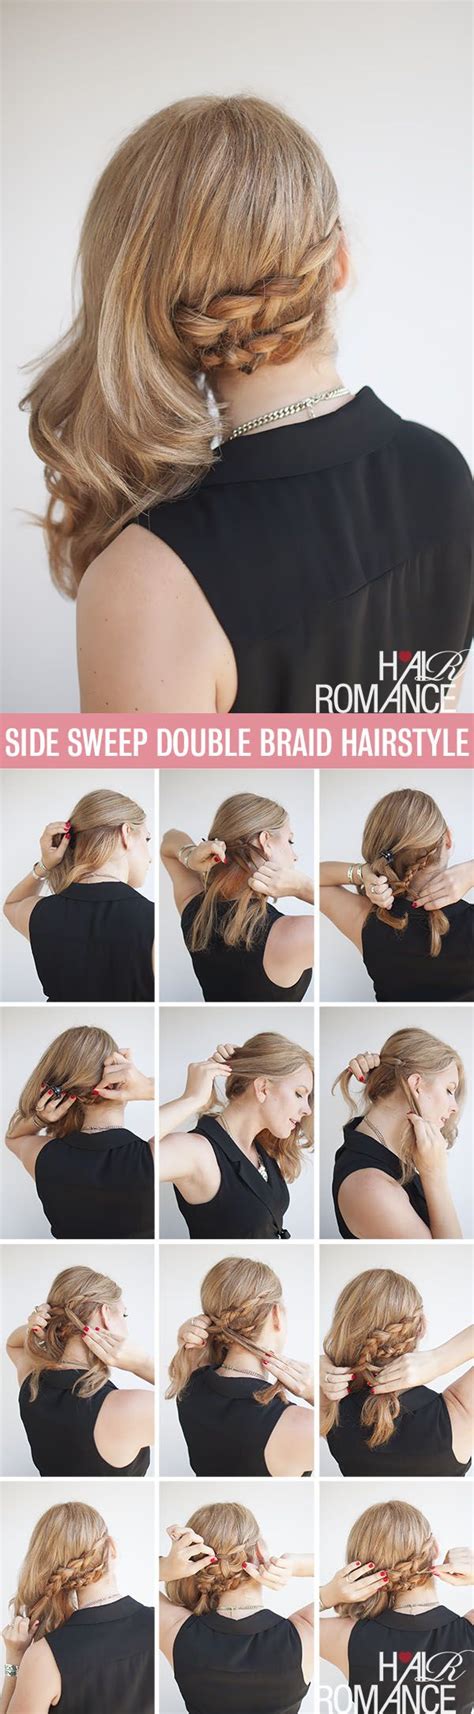 Hair Romance Hairstyle Tutorial Double Braid Side Sweep Hairstyle Side Hairstyles Tutorial